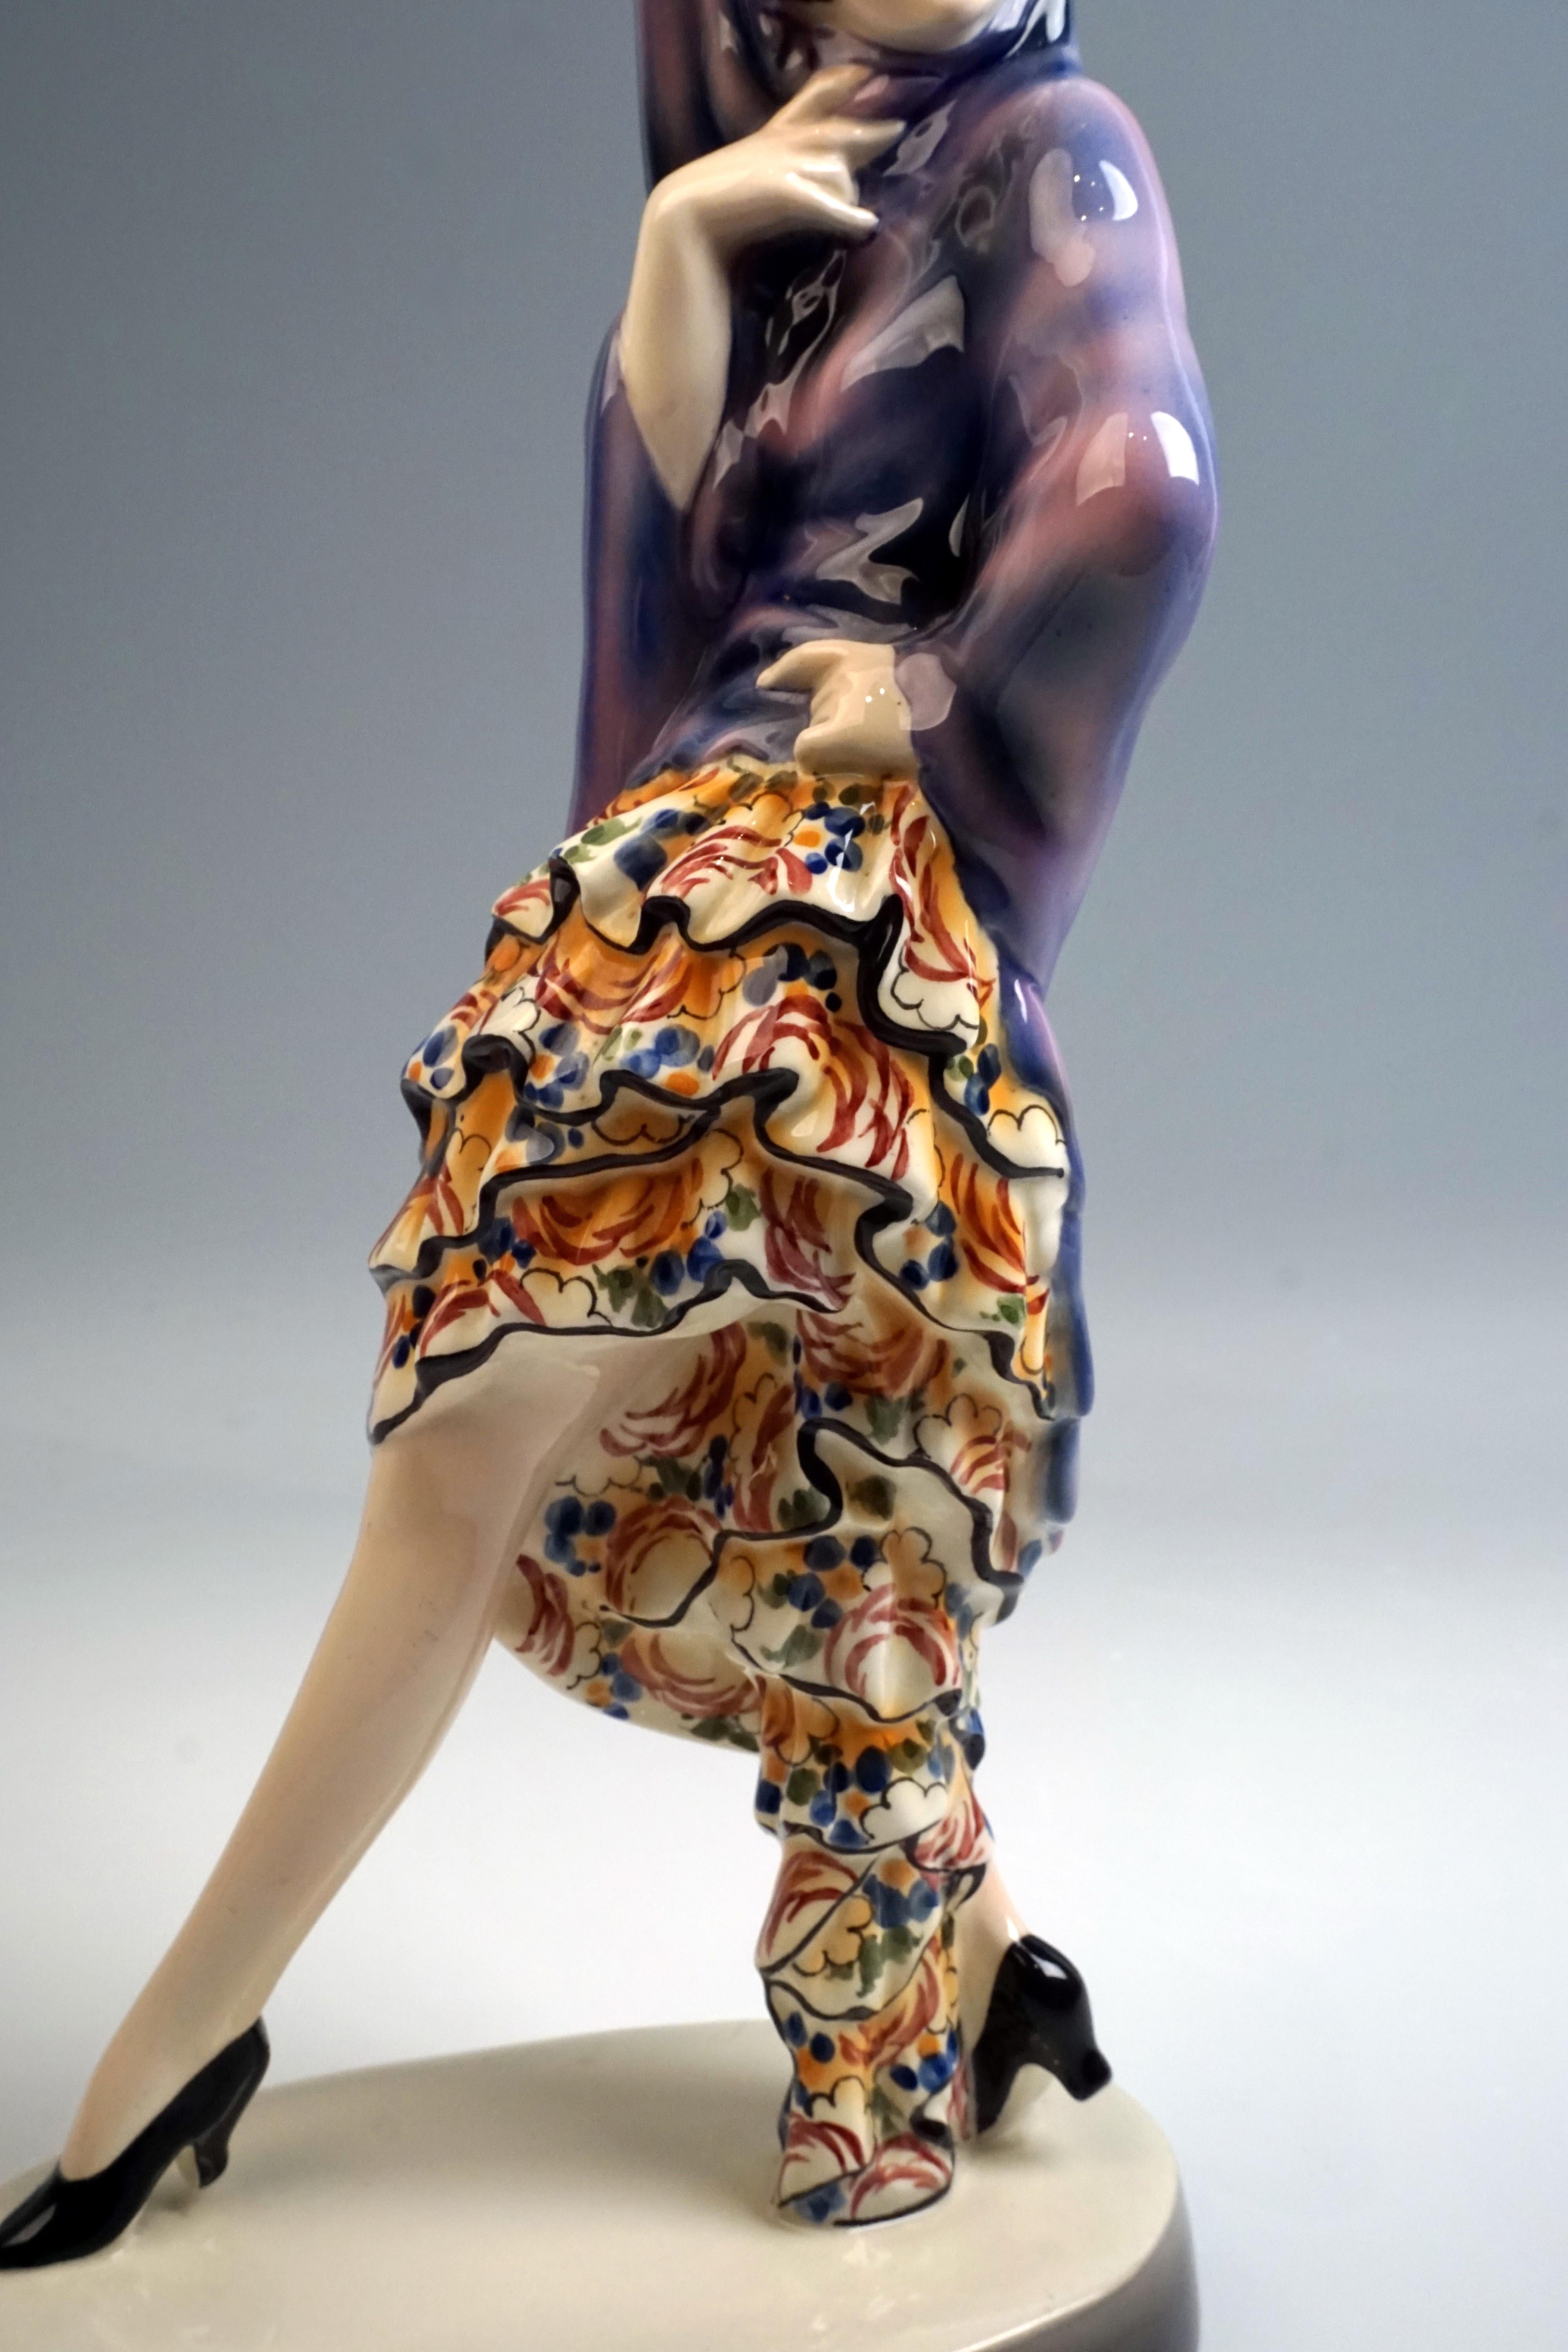 Early 20th Century Goldscheider Vienna Art Deco Figure of a Spanish Lady Dancer by Josef Lorenzl